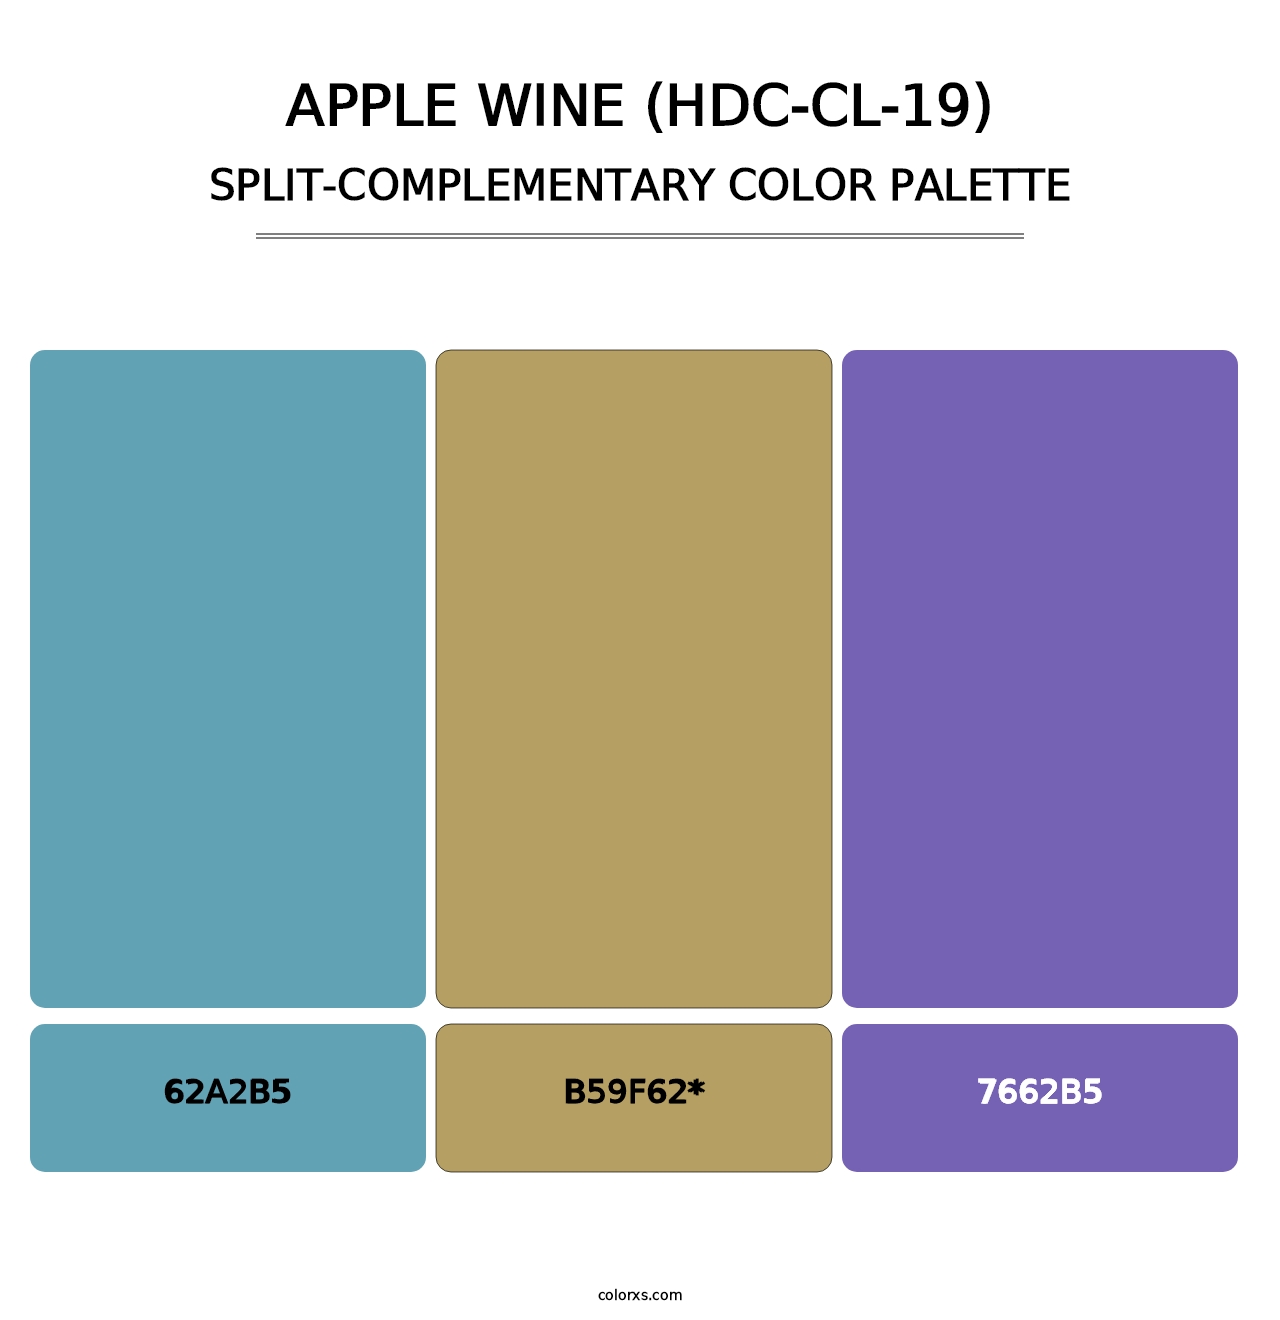 Apple Wine (HDC-CL-19) - Split-Complementary Color Palette